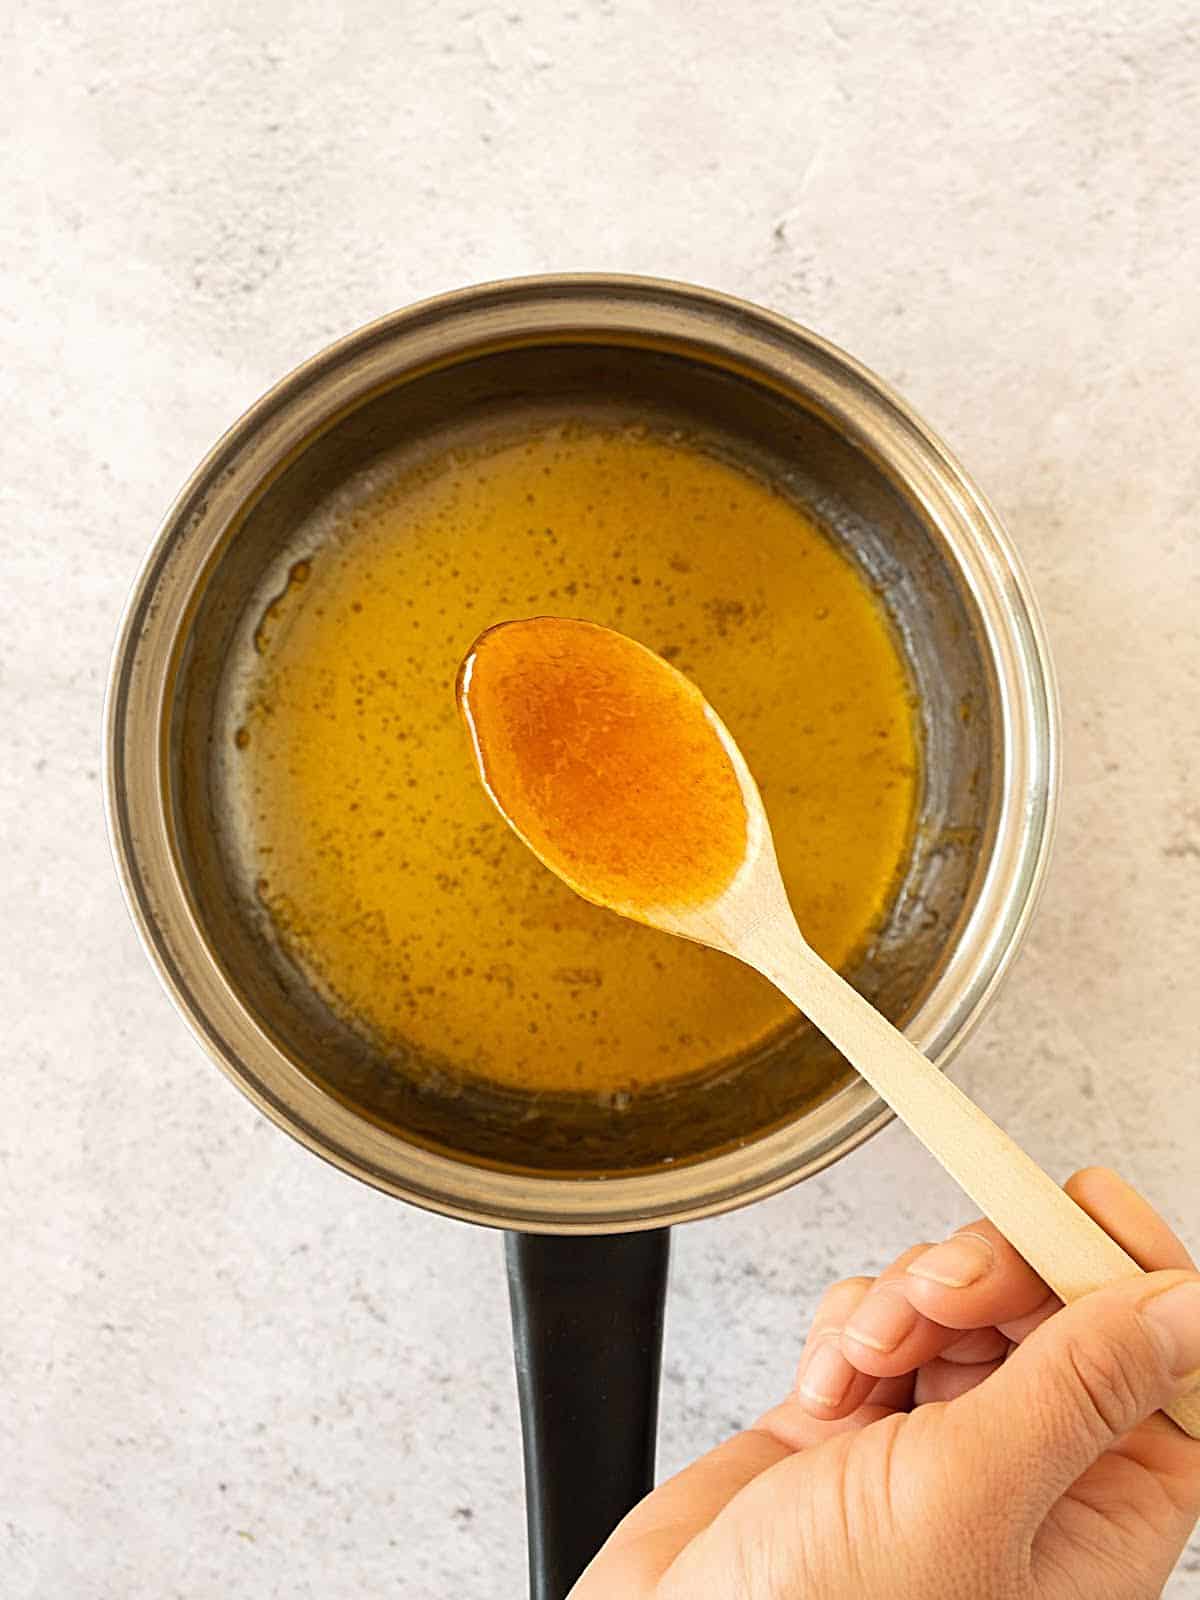 Wooden spoon lifting honey sriracha glaze from a saucepan. Light grey surface.